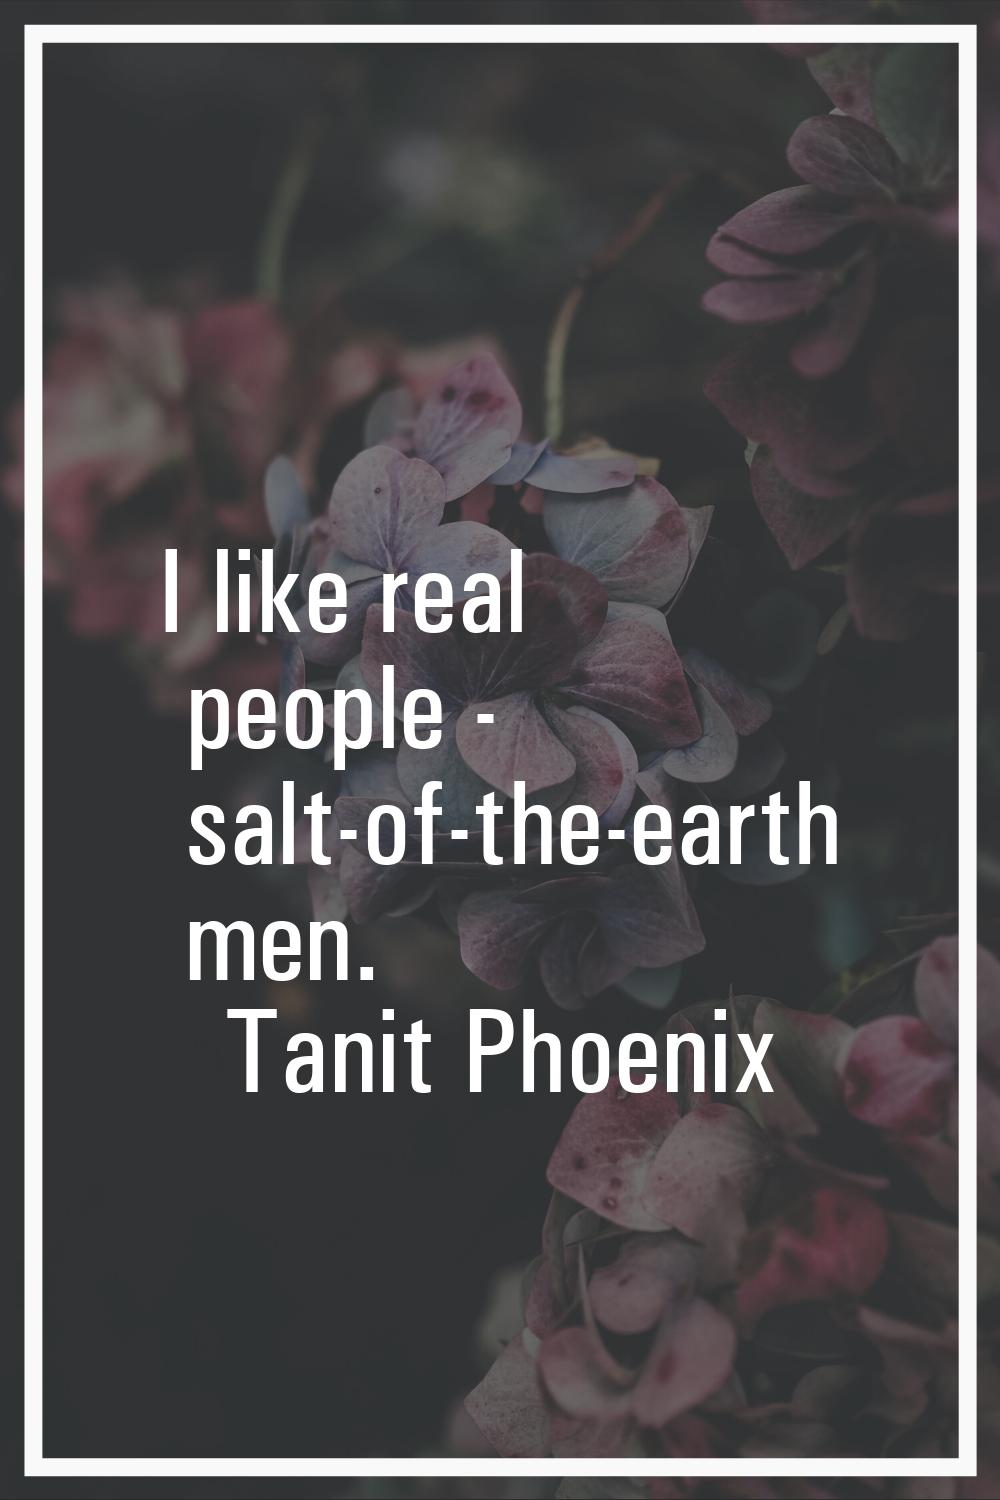 I like real people - salt-of-the-earth men.